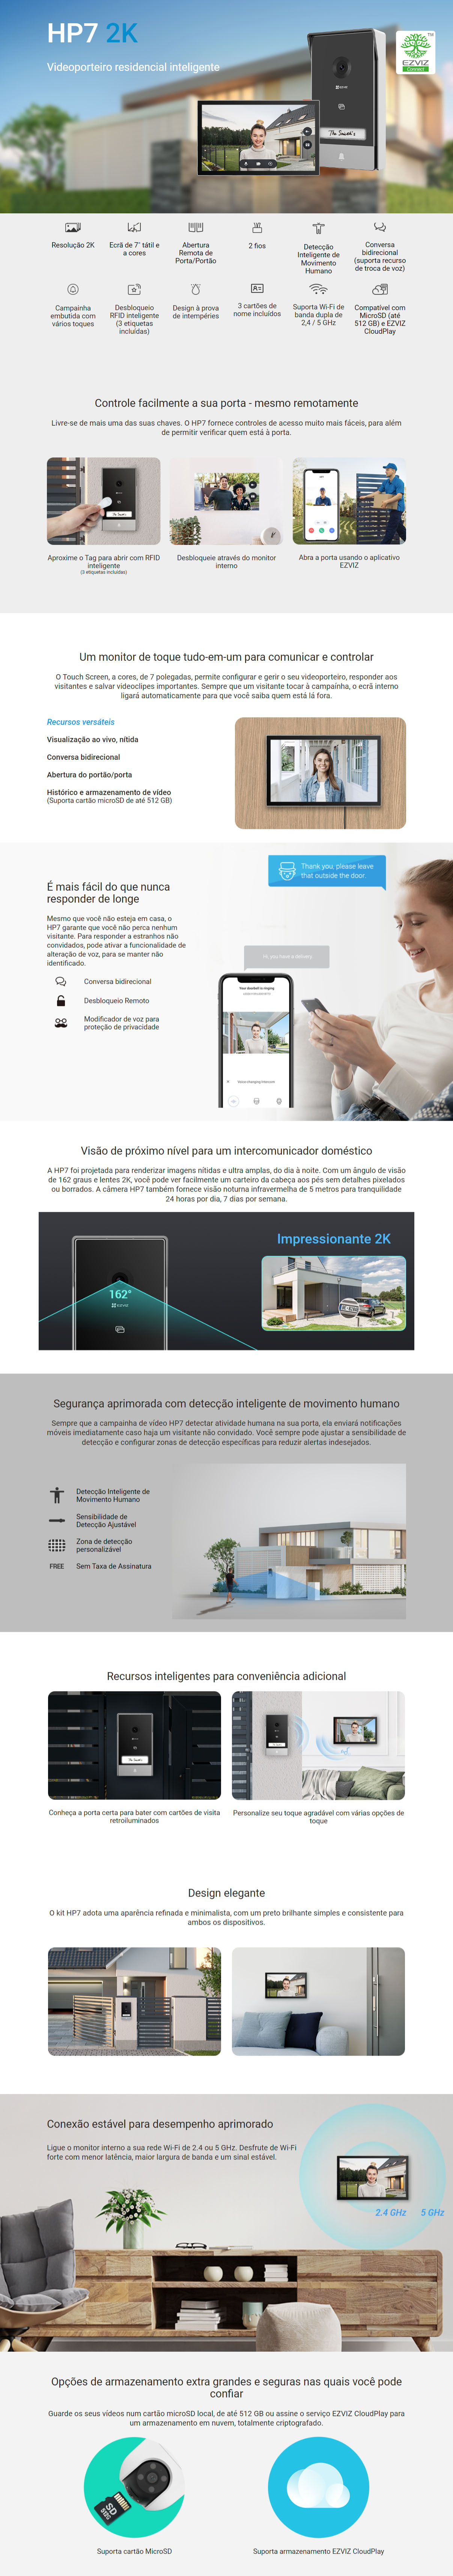 Kit Com 2 Un. Fechadura Inteligente Impressao Digital Wifi Ezviz